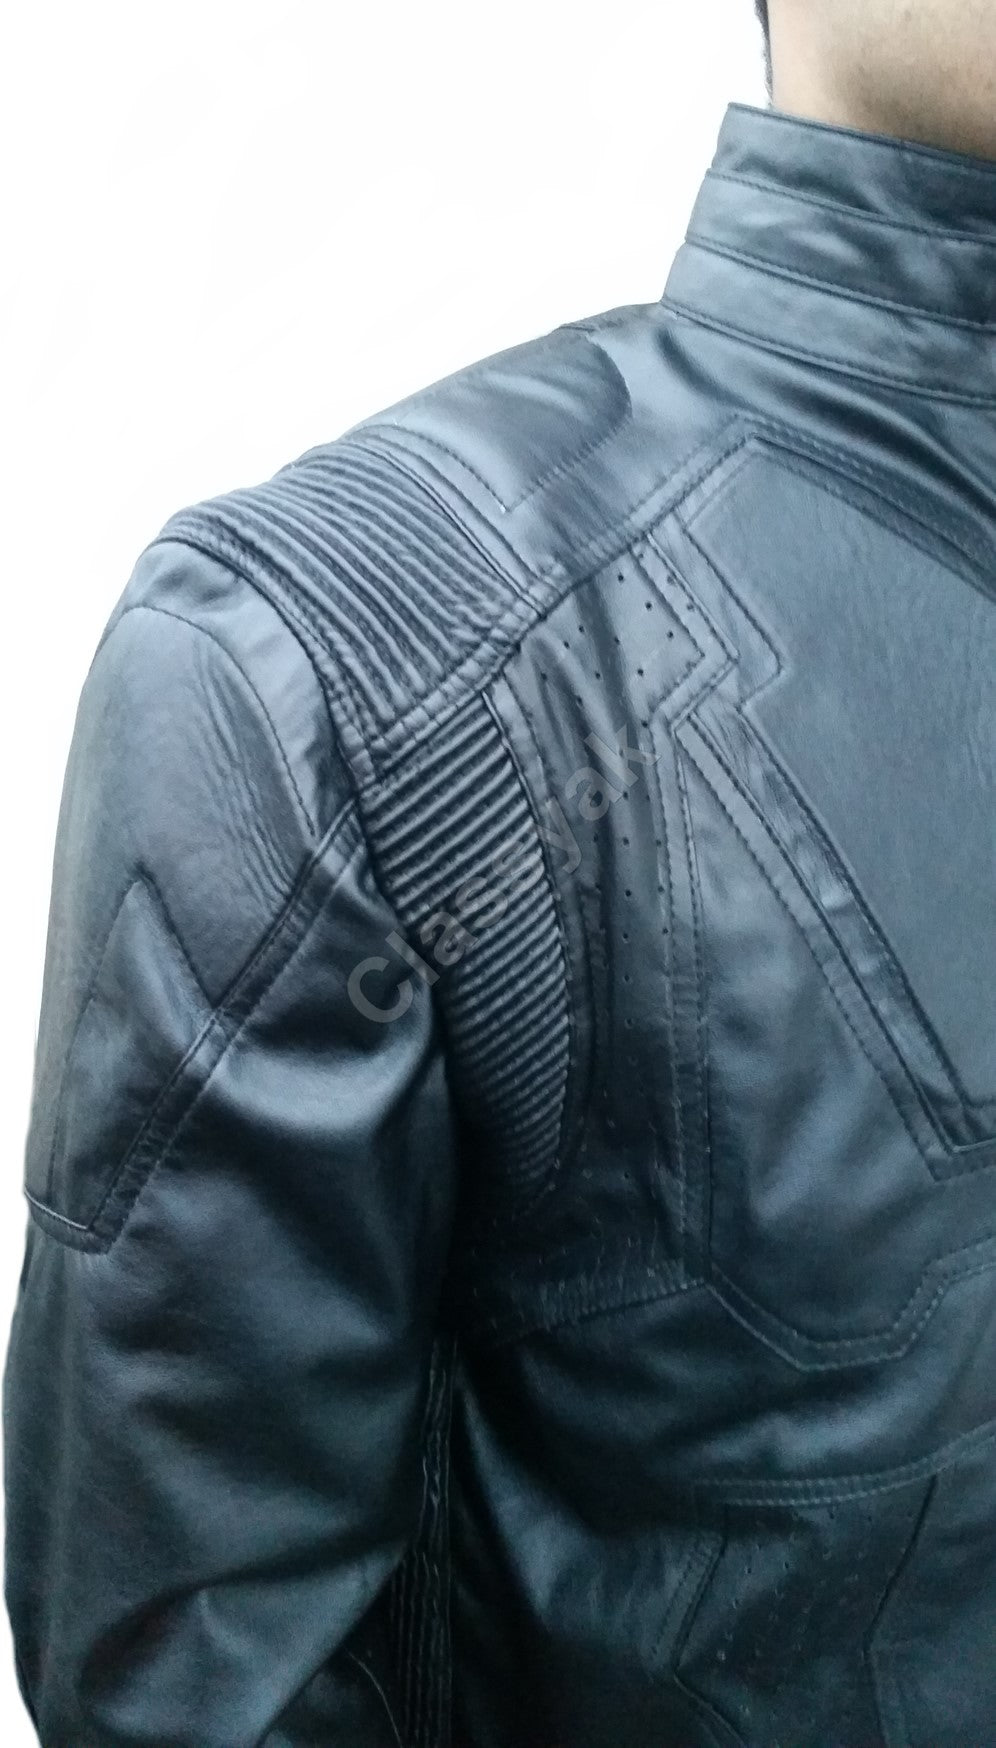 Classyak Fashion Oblivion Faux Leather Jacket, High Quality Artificial Leather, Xs-5xl